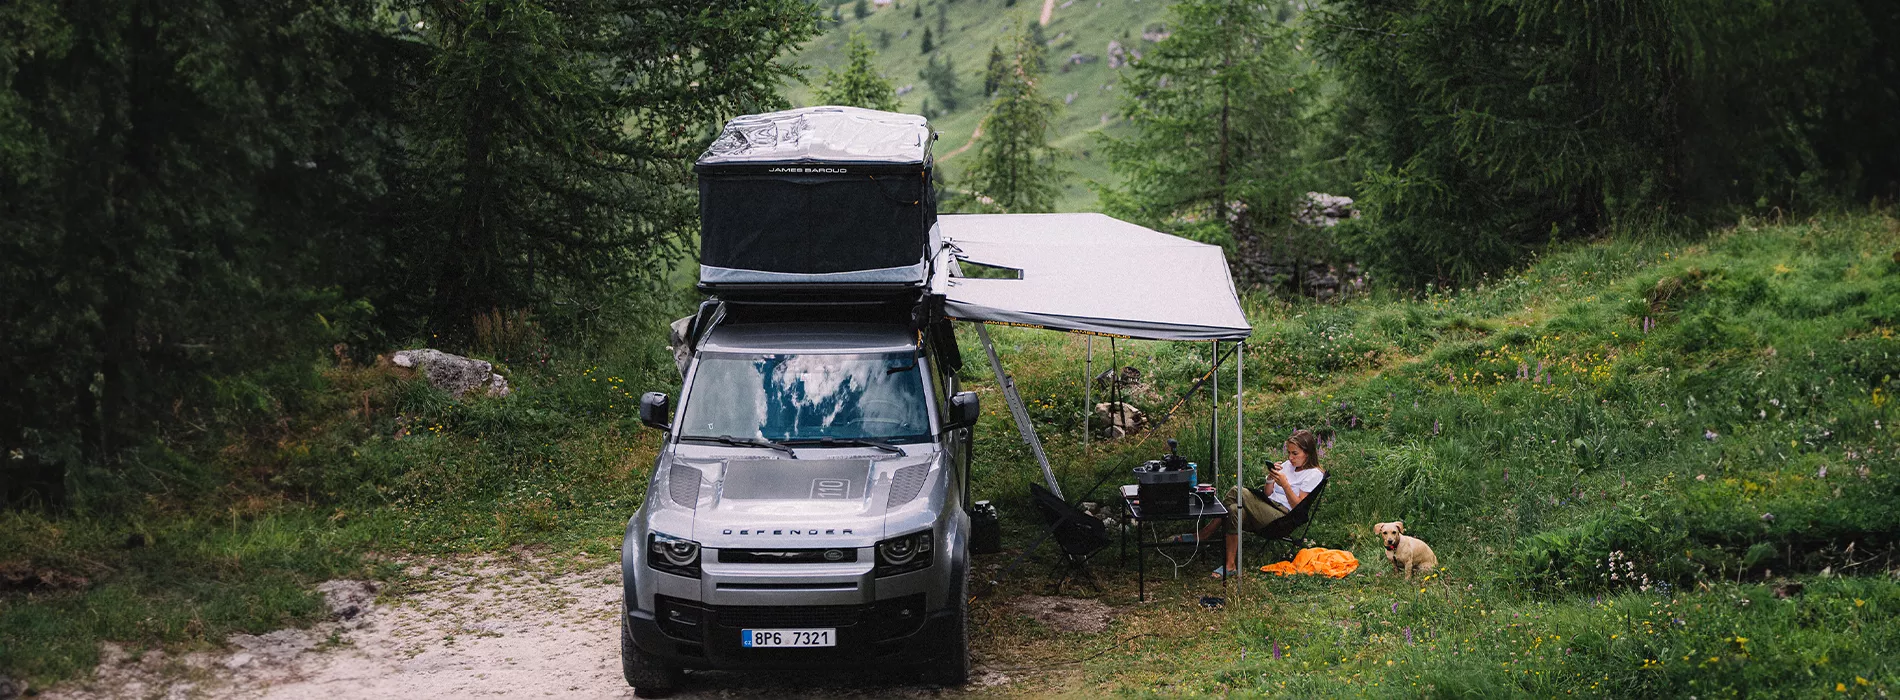 Elvijs Viļevičs @aparaats James Baroud Space on top of his Audi for family camping